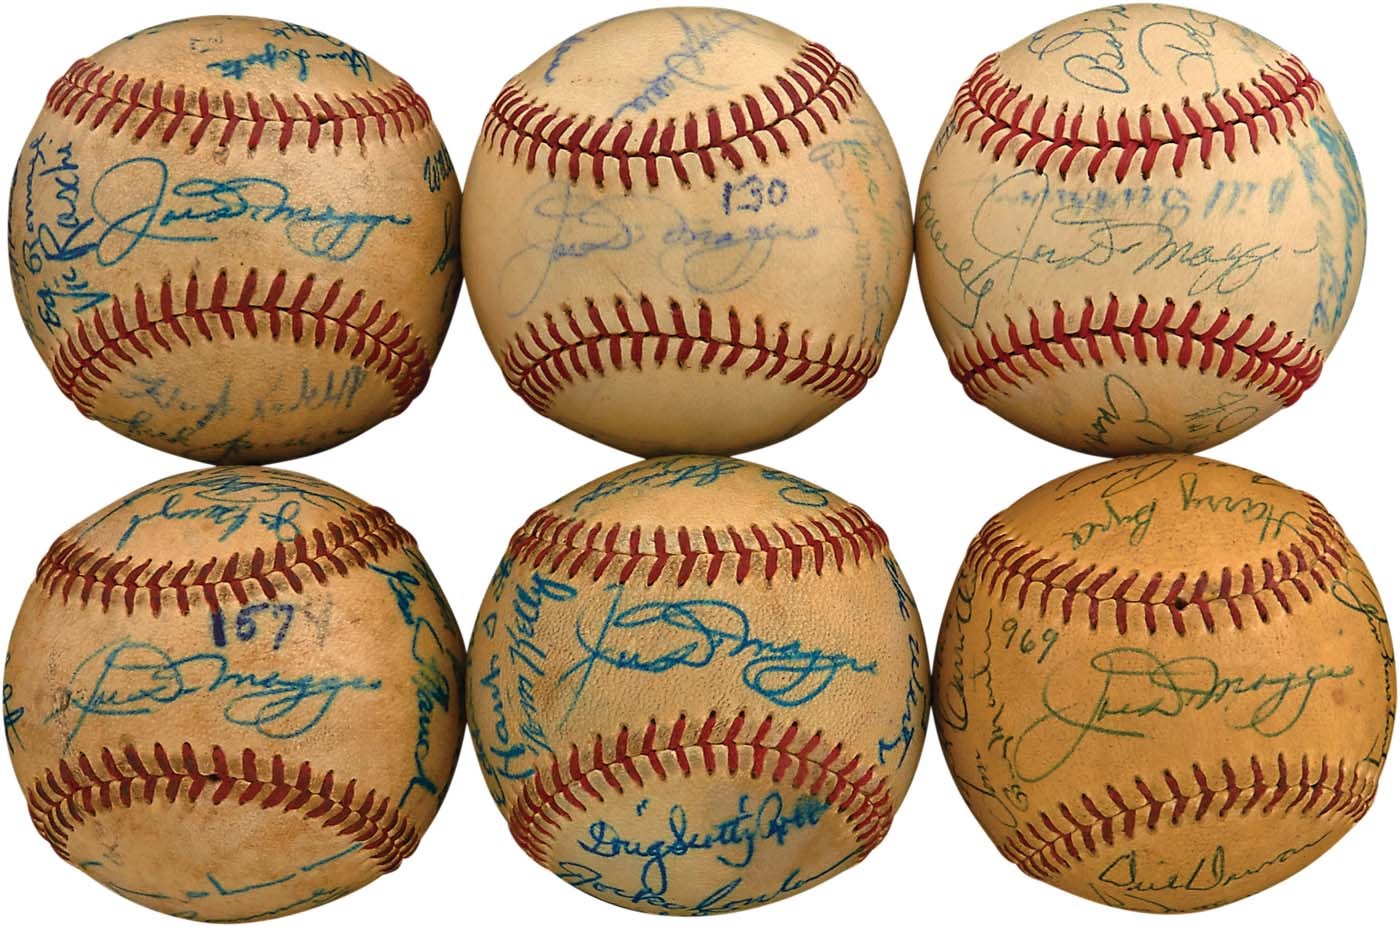 The John O'connor Signed Baseball Collection - 1940s-50s Yankees & Stars Signed Baseballs ALL w/Joe DiMaggio (6)